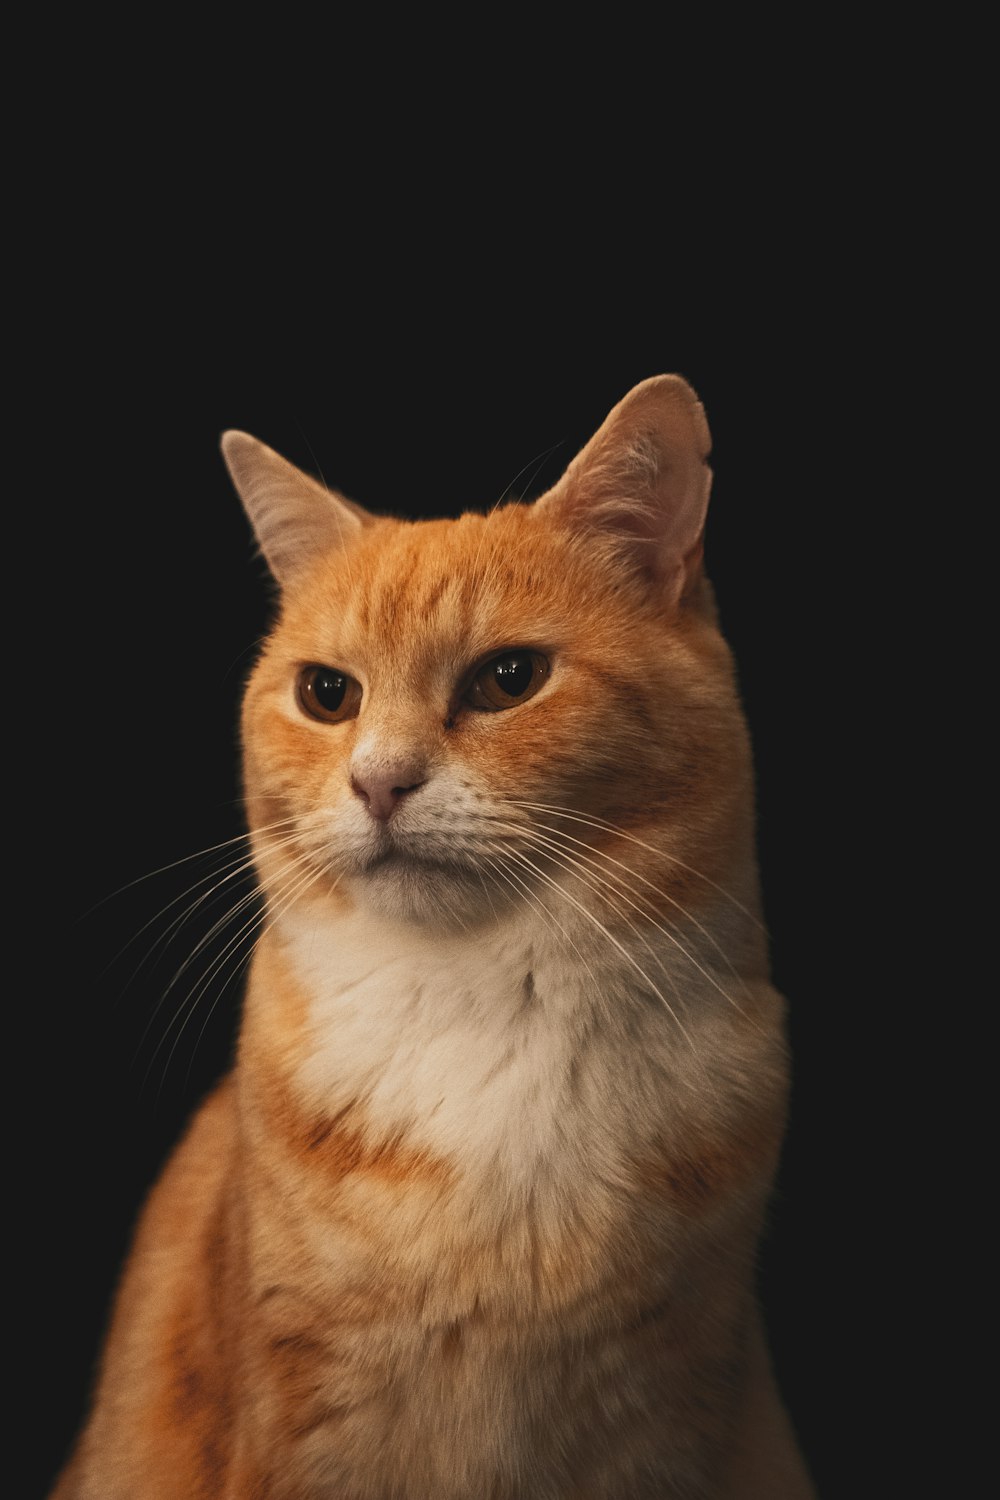 18+ Thousand Cat Avatar Royalty-Free Images, Stock Photos